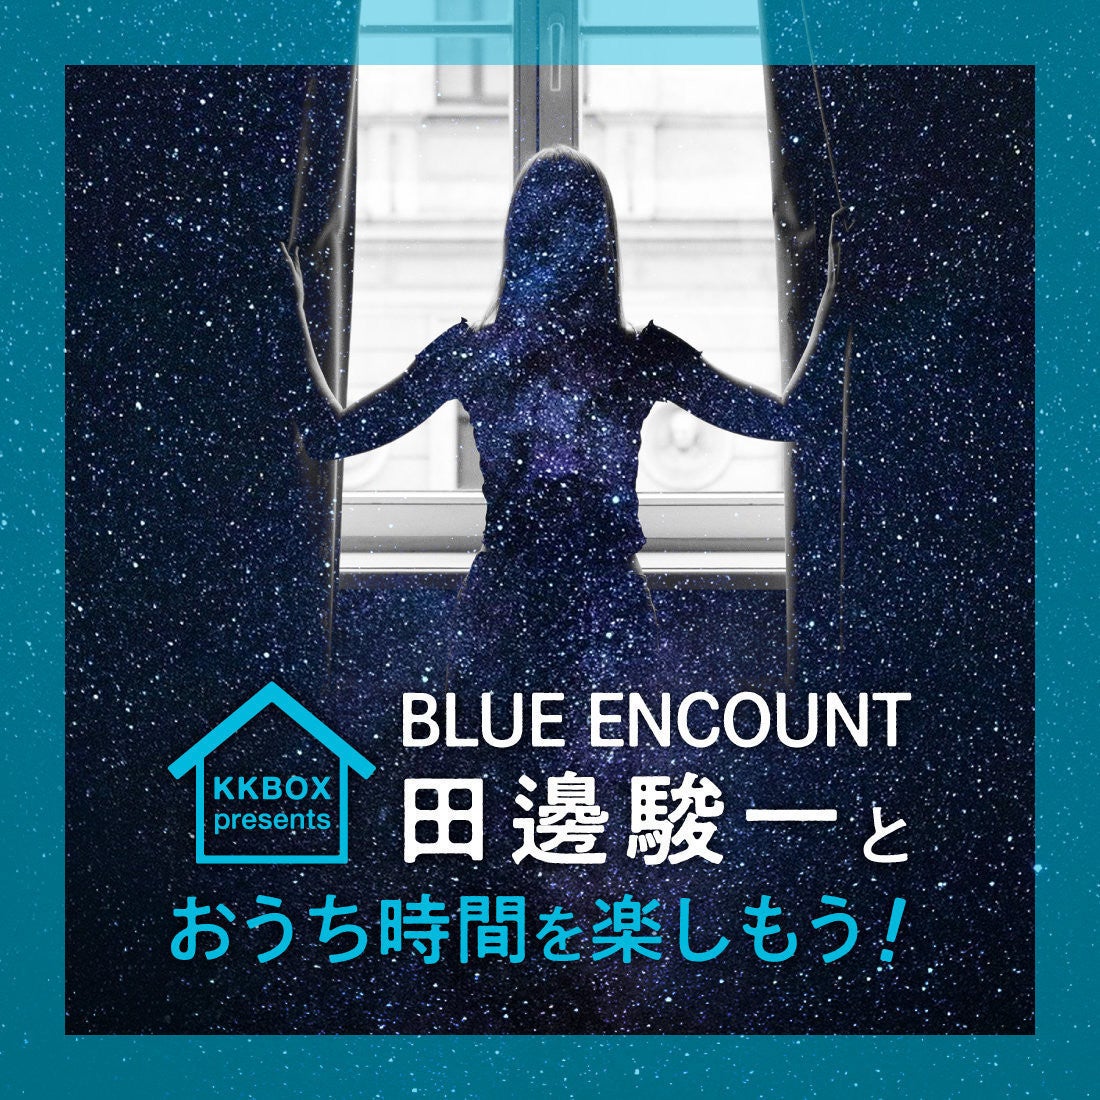 Kkbox Presents Blue Encount 田邊駿一とおうち時間を楽しもう マイナビニュース